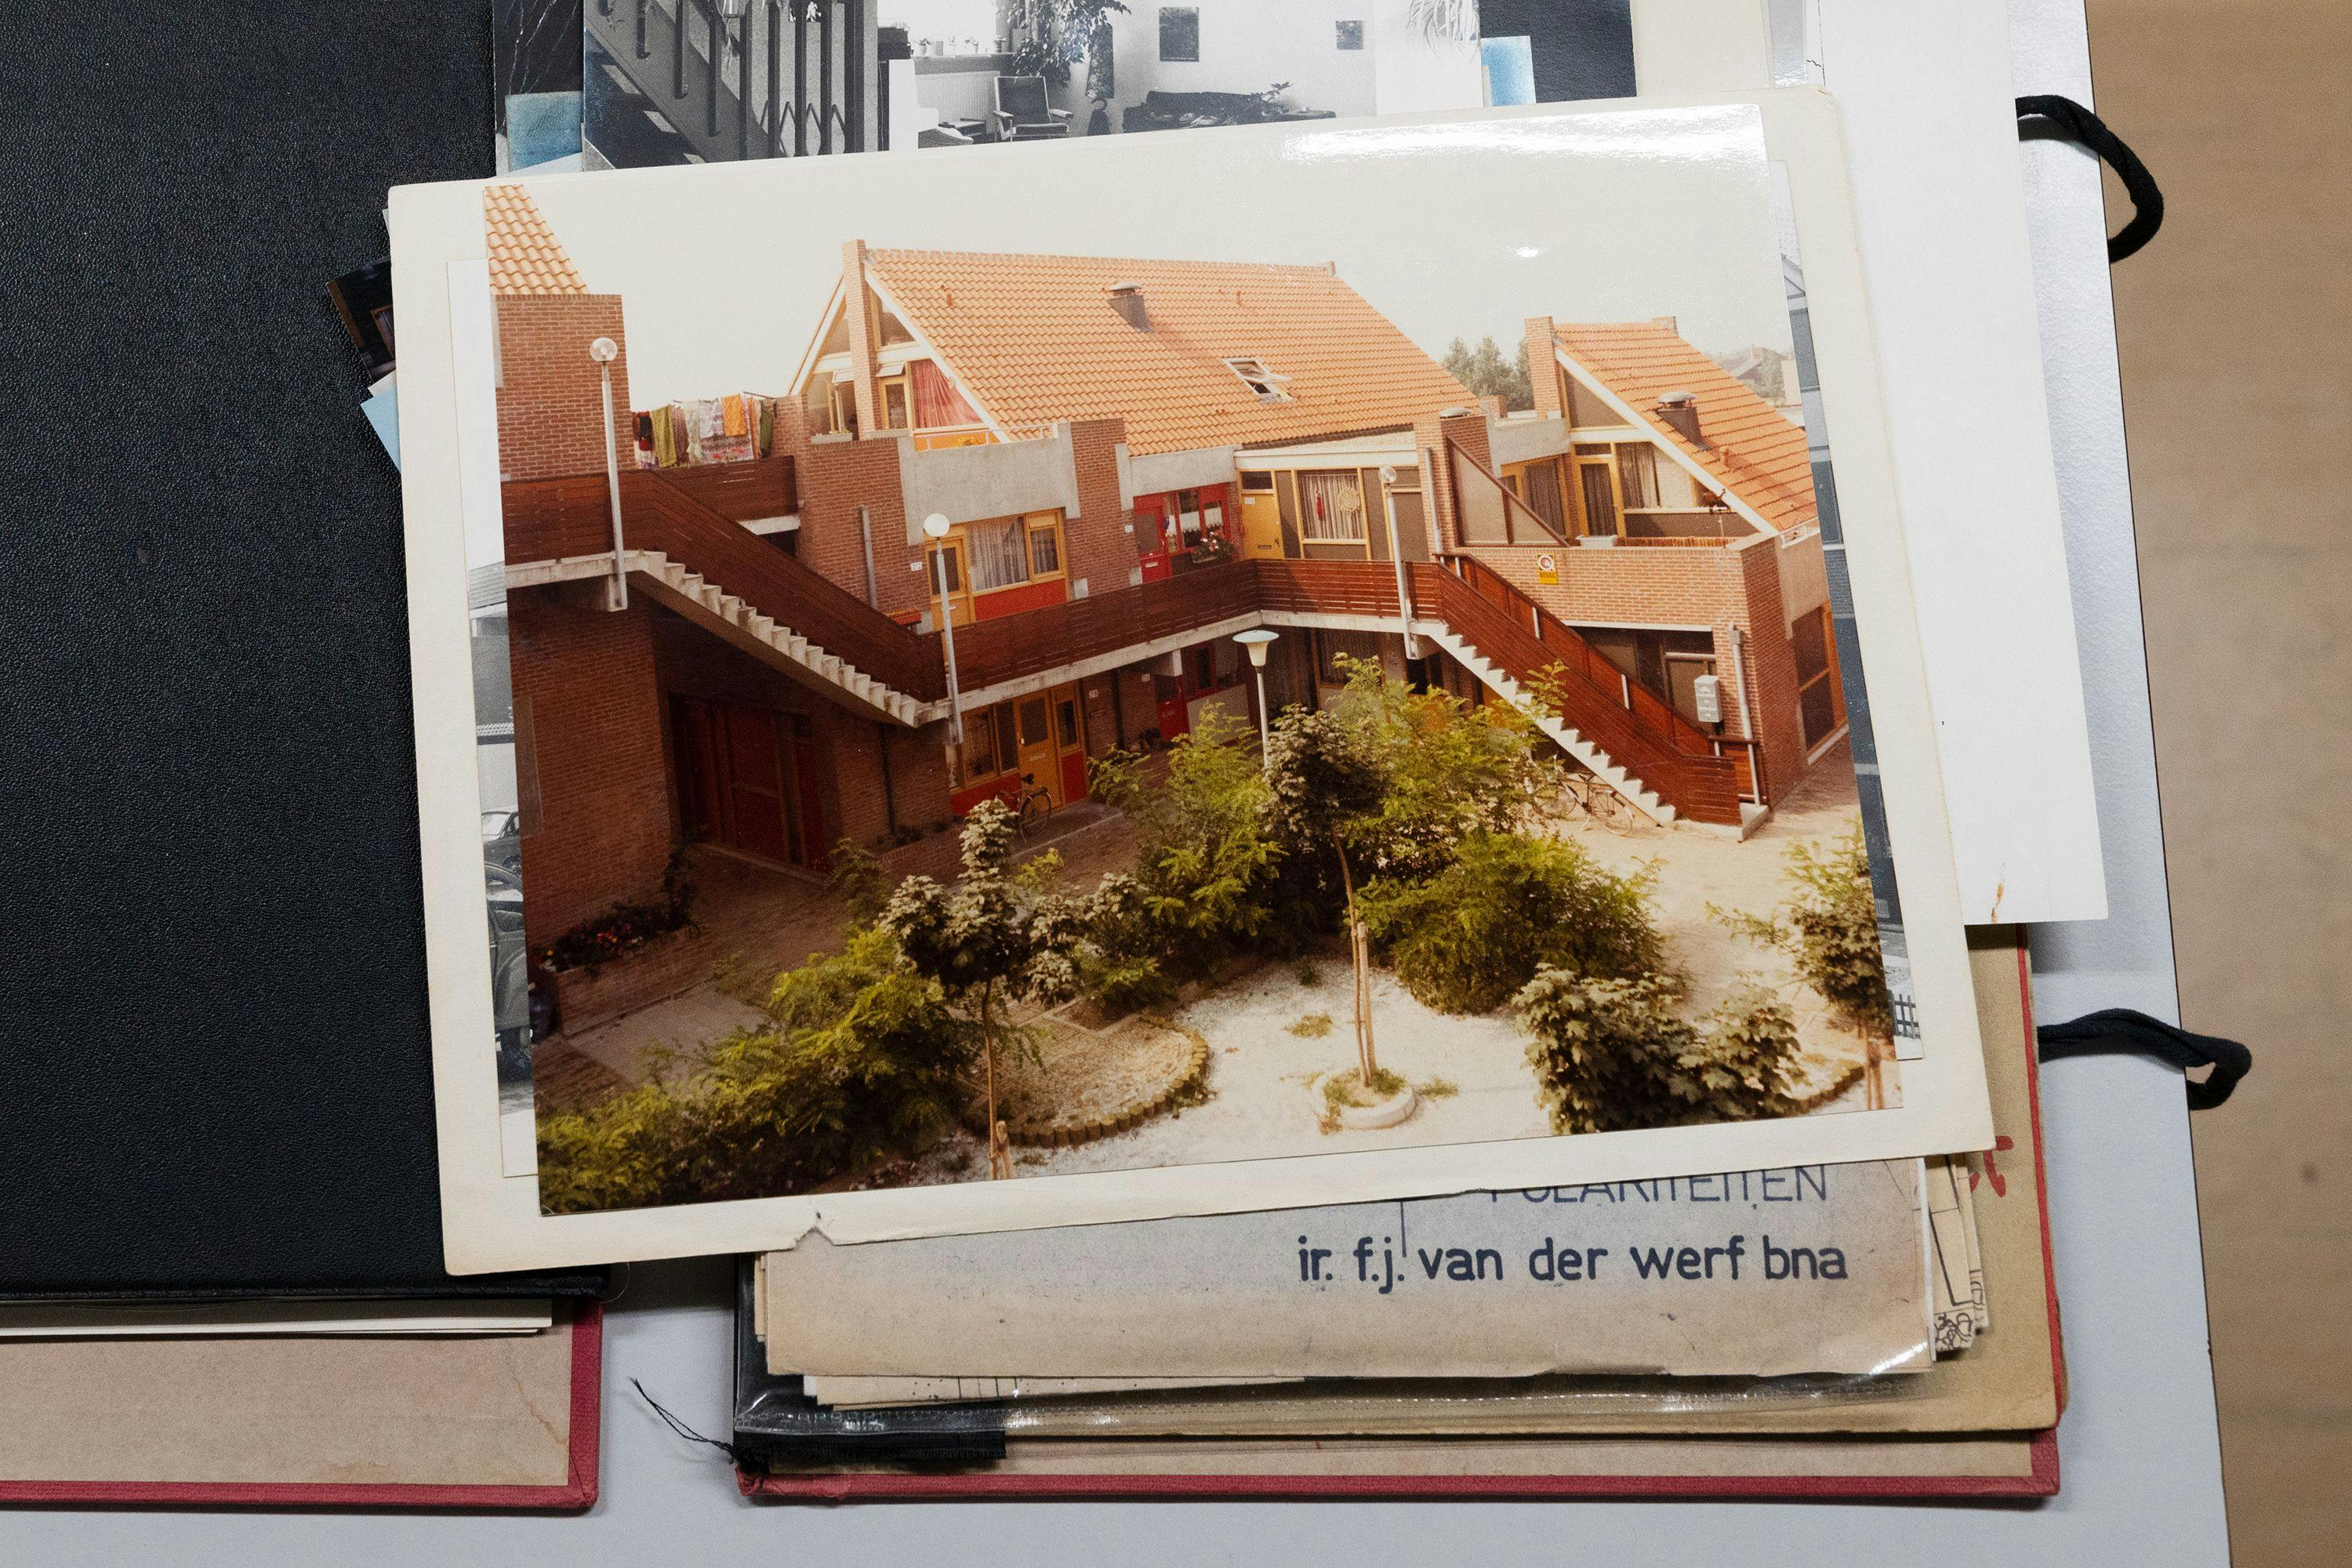 Frans van der Werf archive. Photo Petra van der Ree.